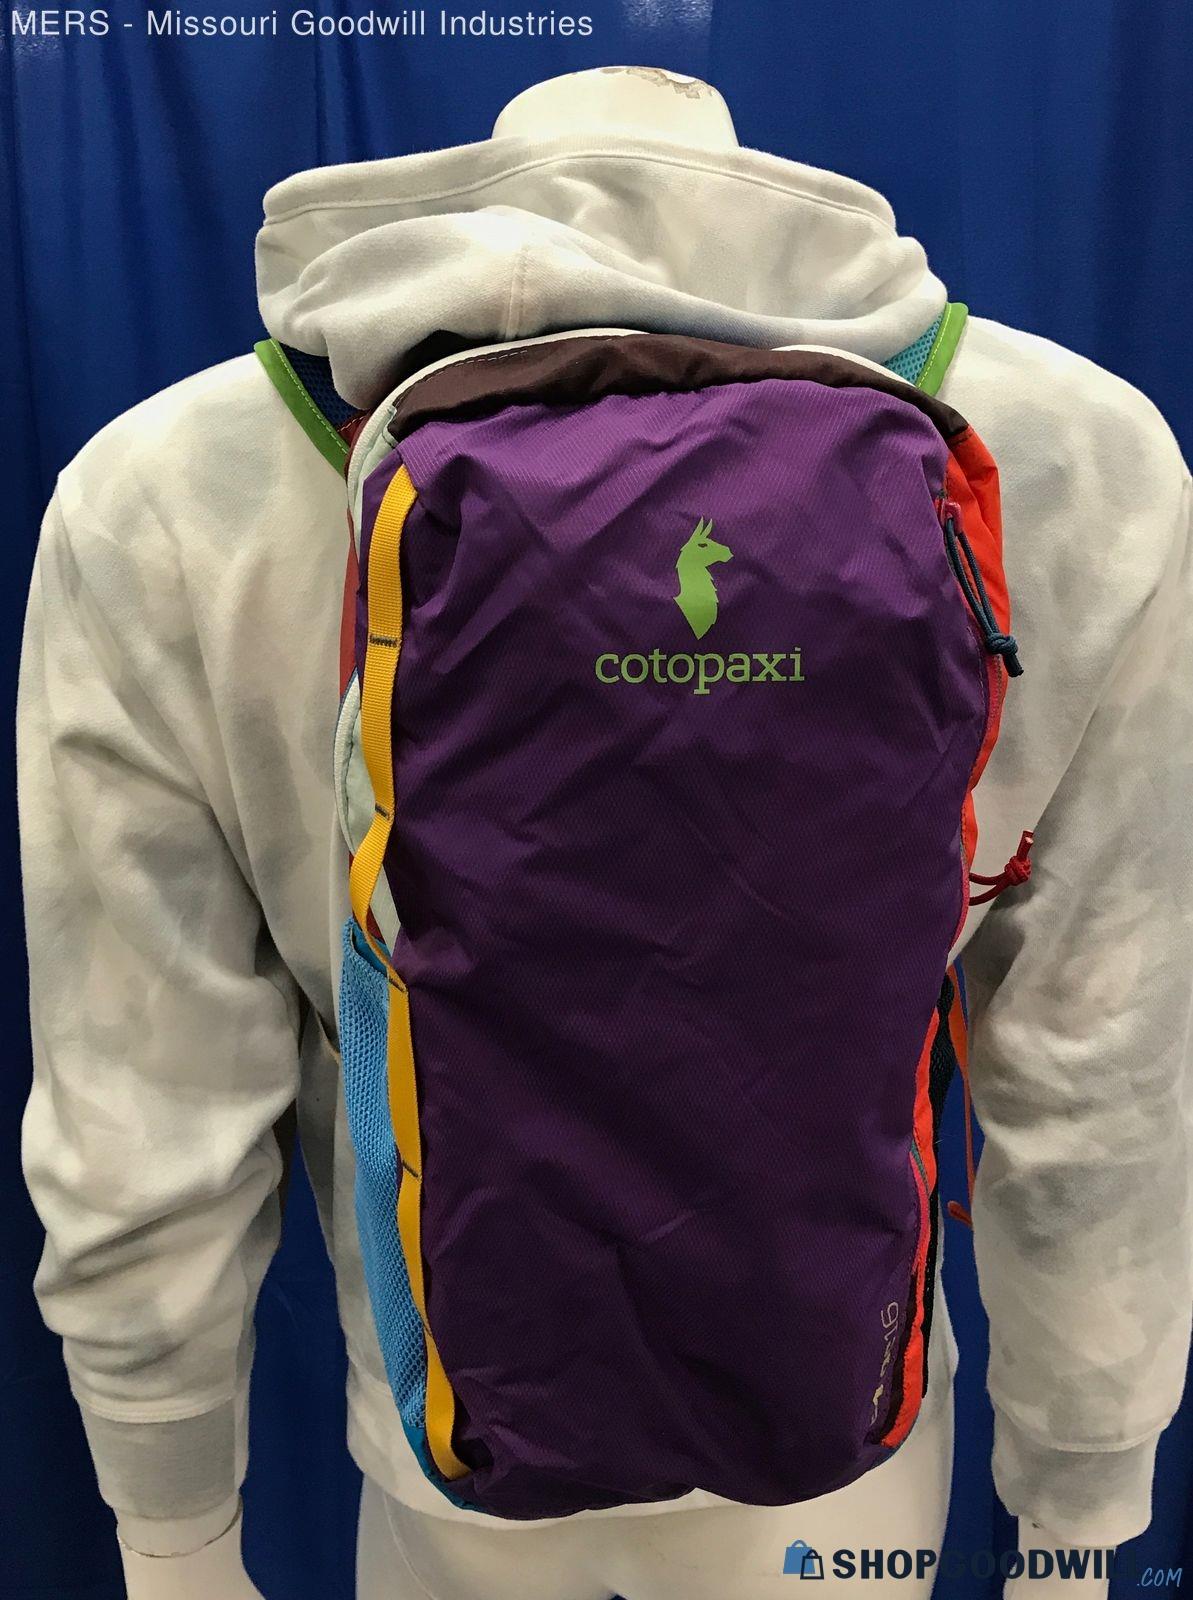 Cotopaxi Multicolor Backpack | ShopGoodwill.com